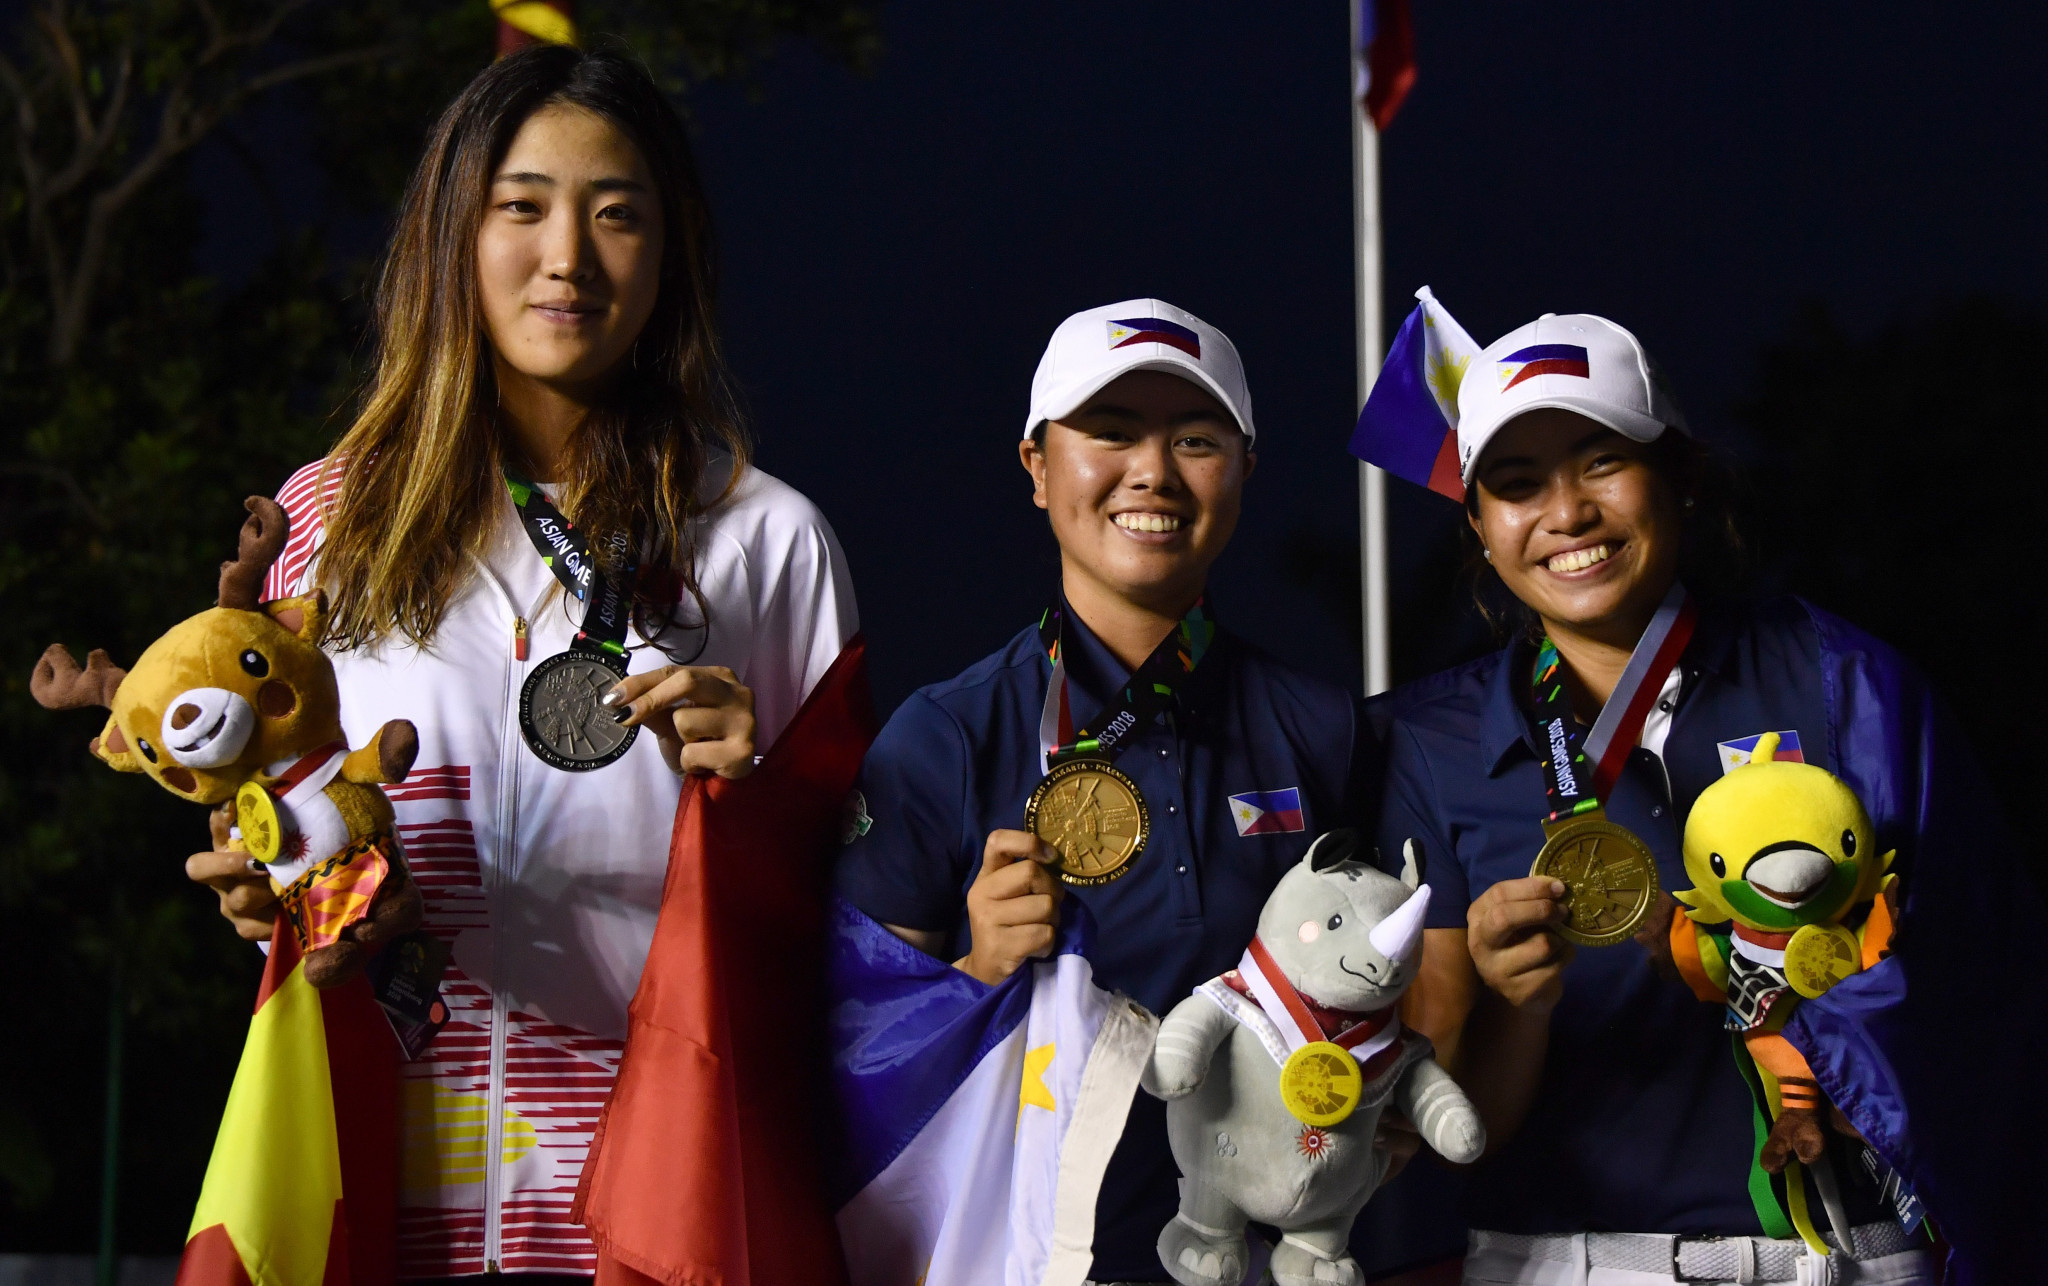 Yuka Saso won two gold medals in golf at Jakarta Palembang 2018 ©Getty Images